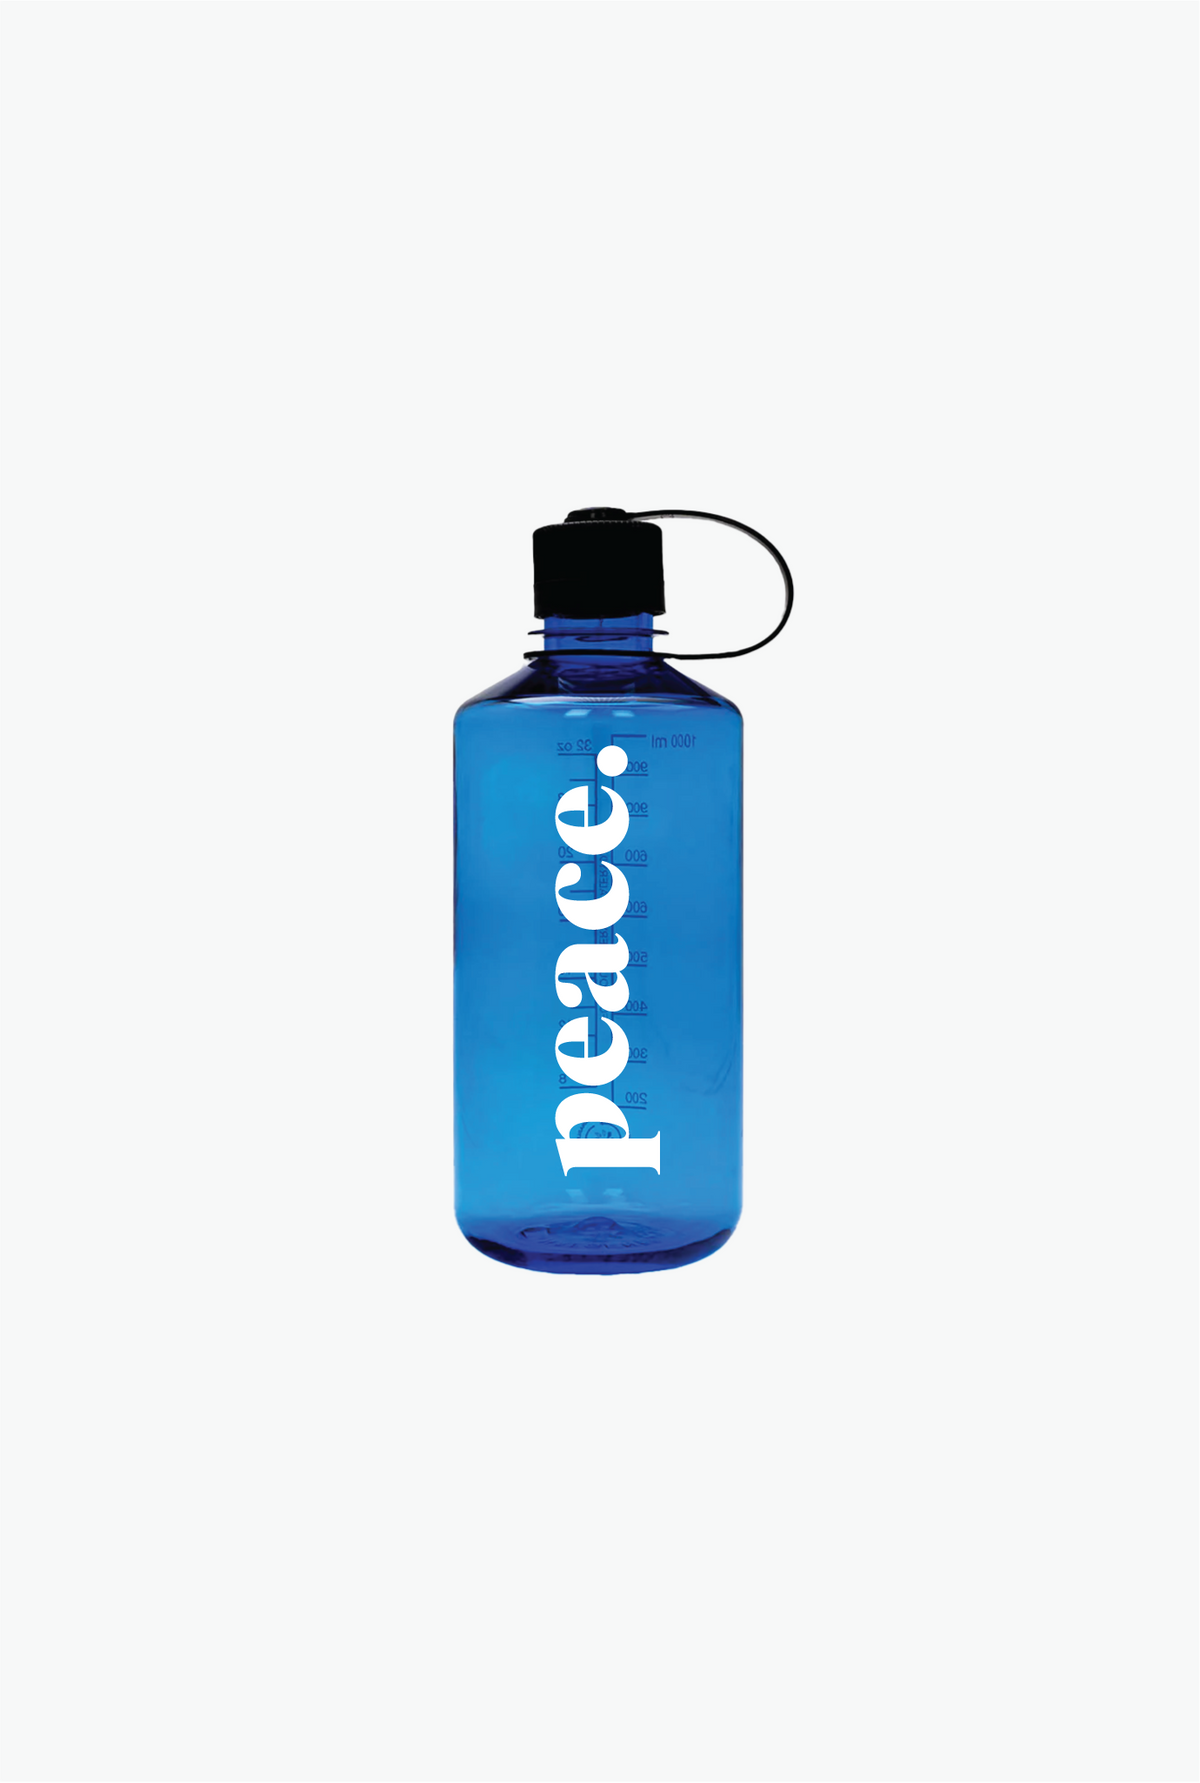 Peace Water Bottle - Royal